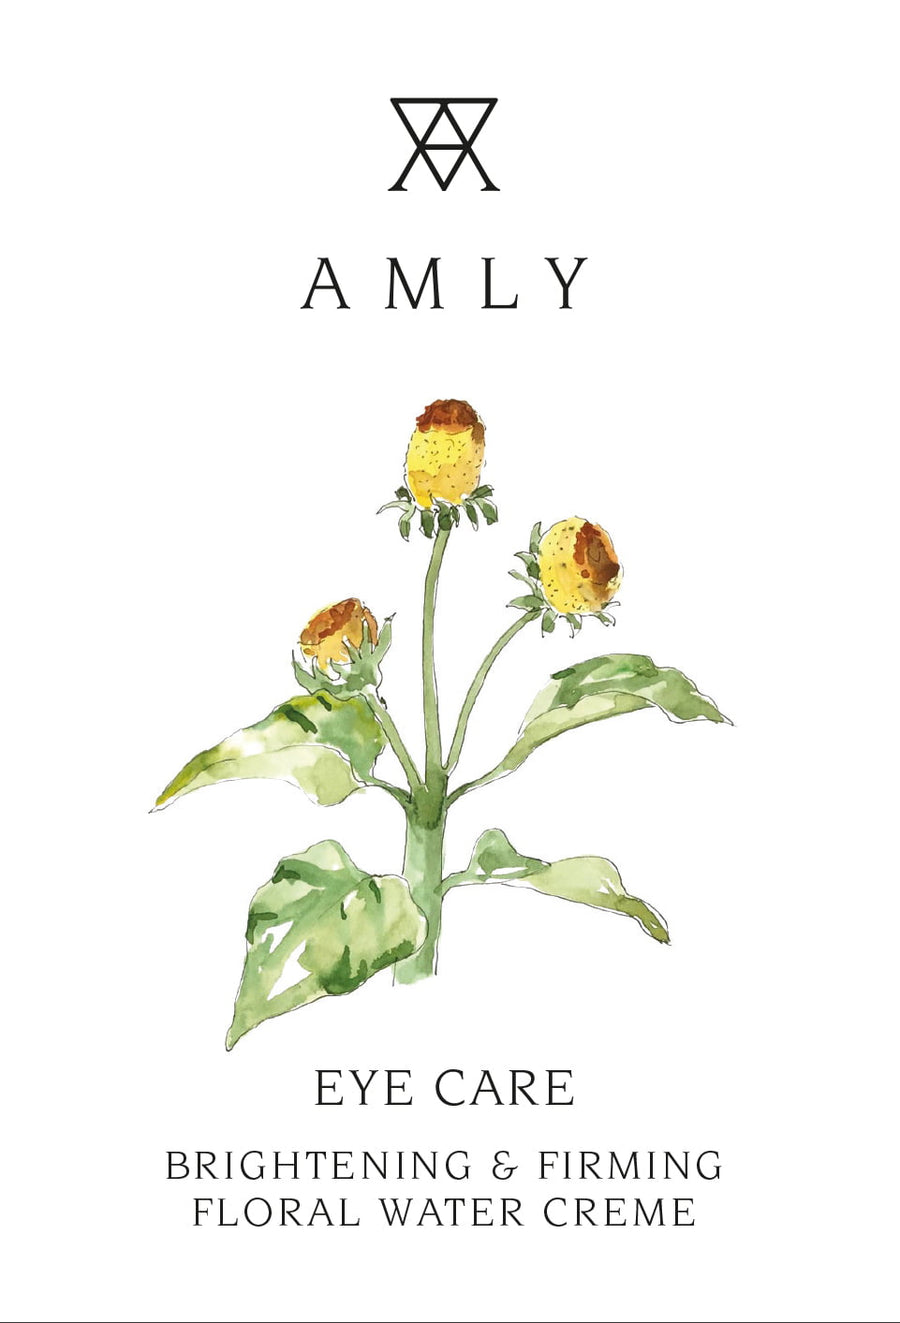 AMLY Eye Care Floral Water Creme 15ml